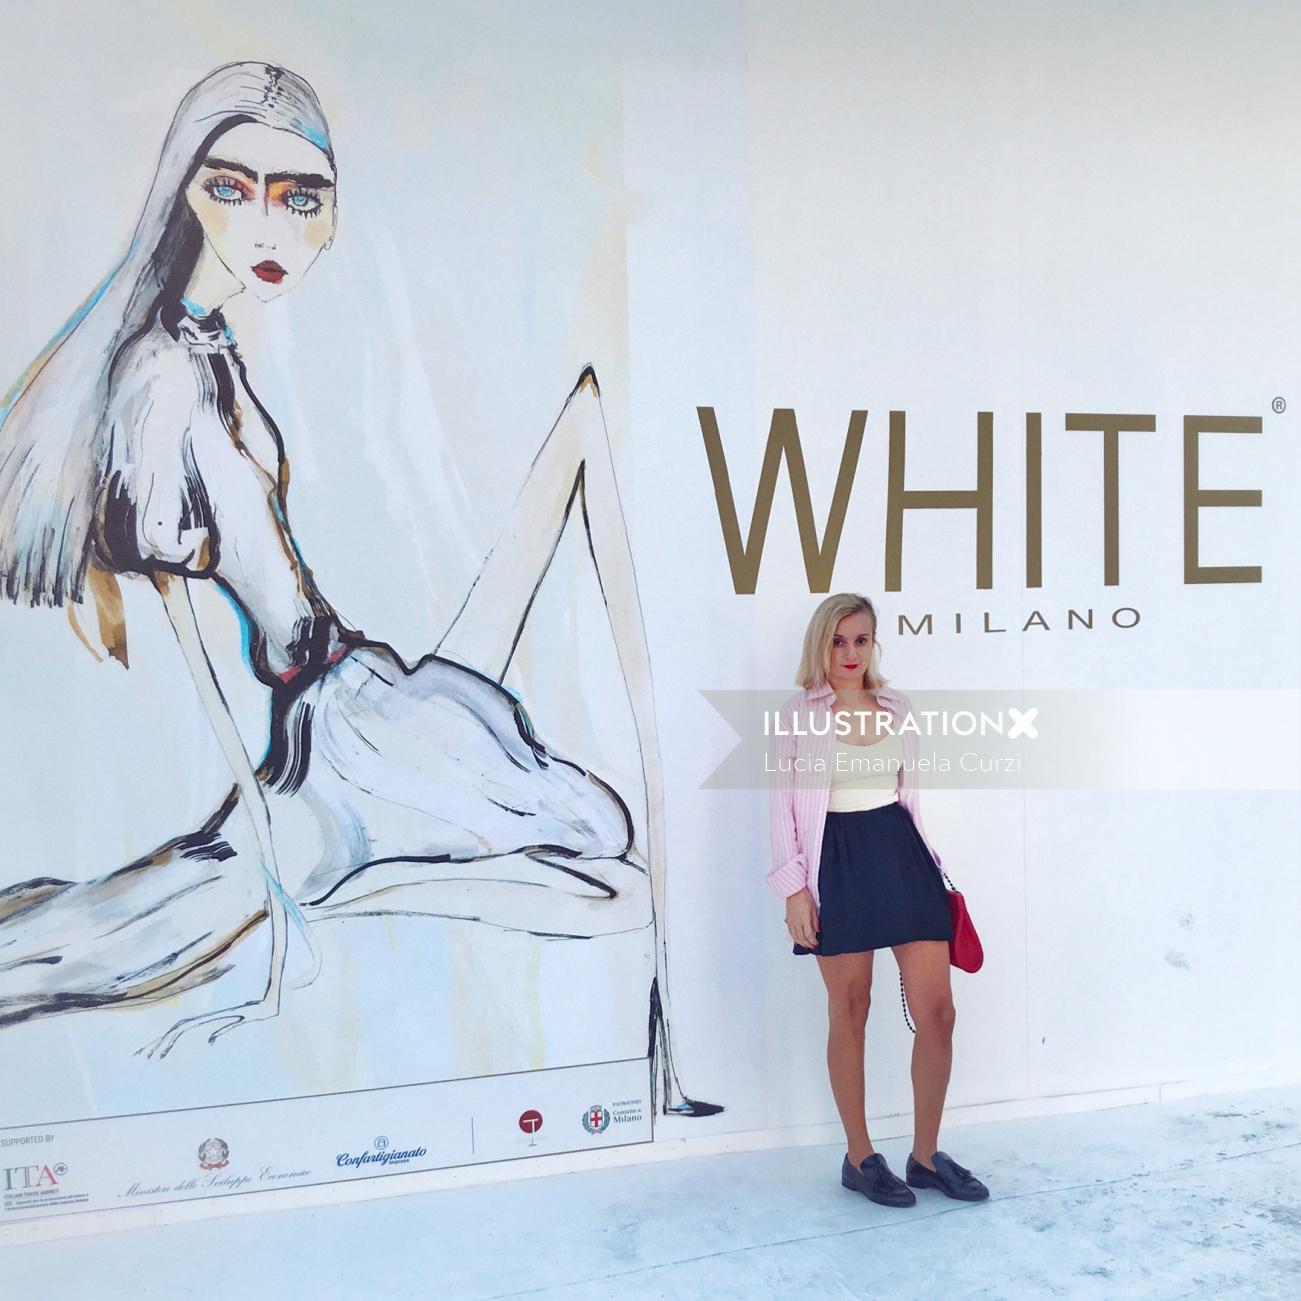 Advertising White Milano
